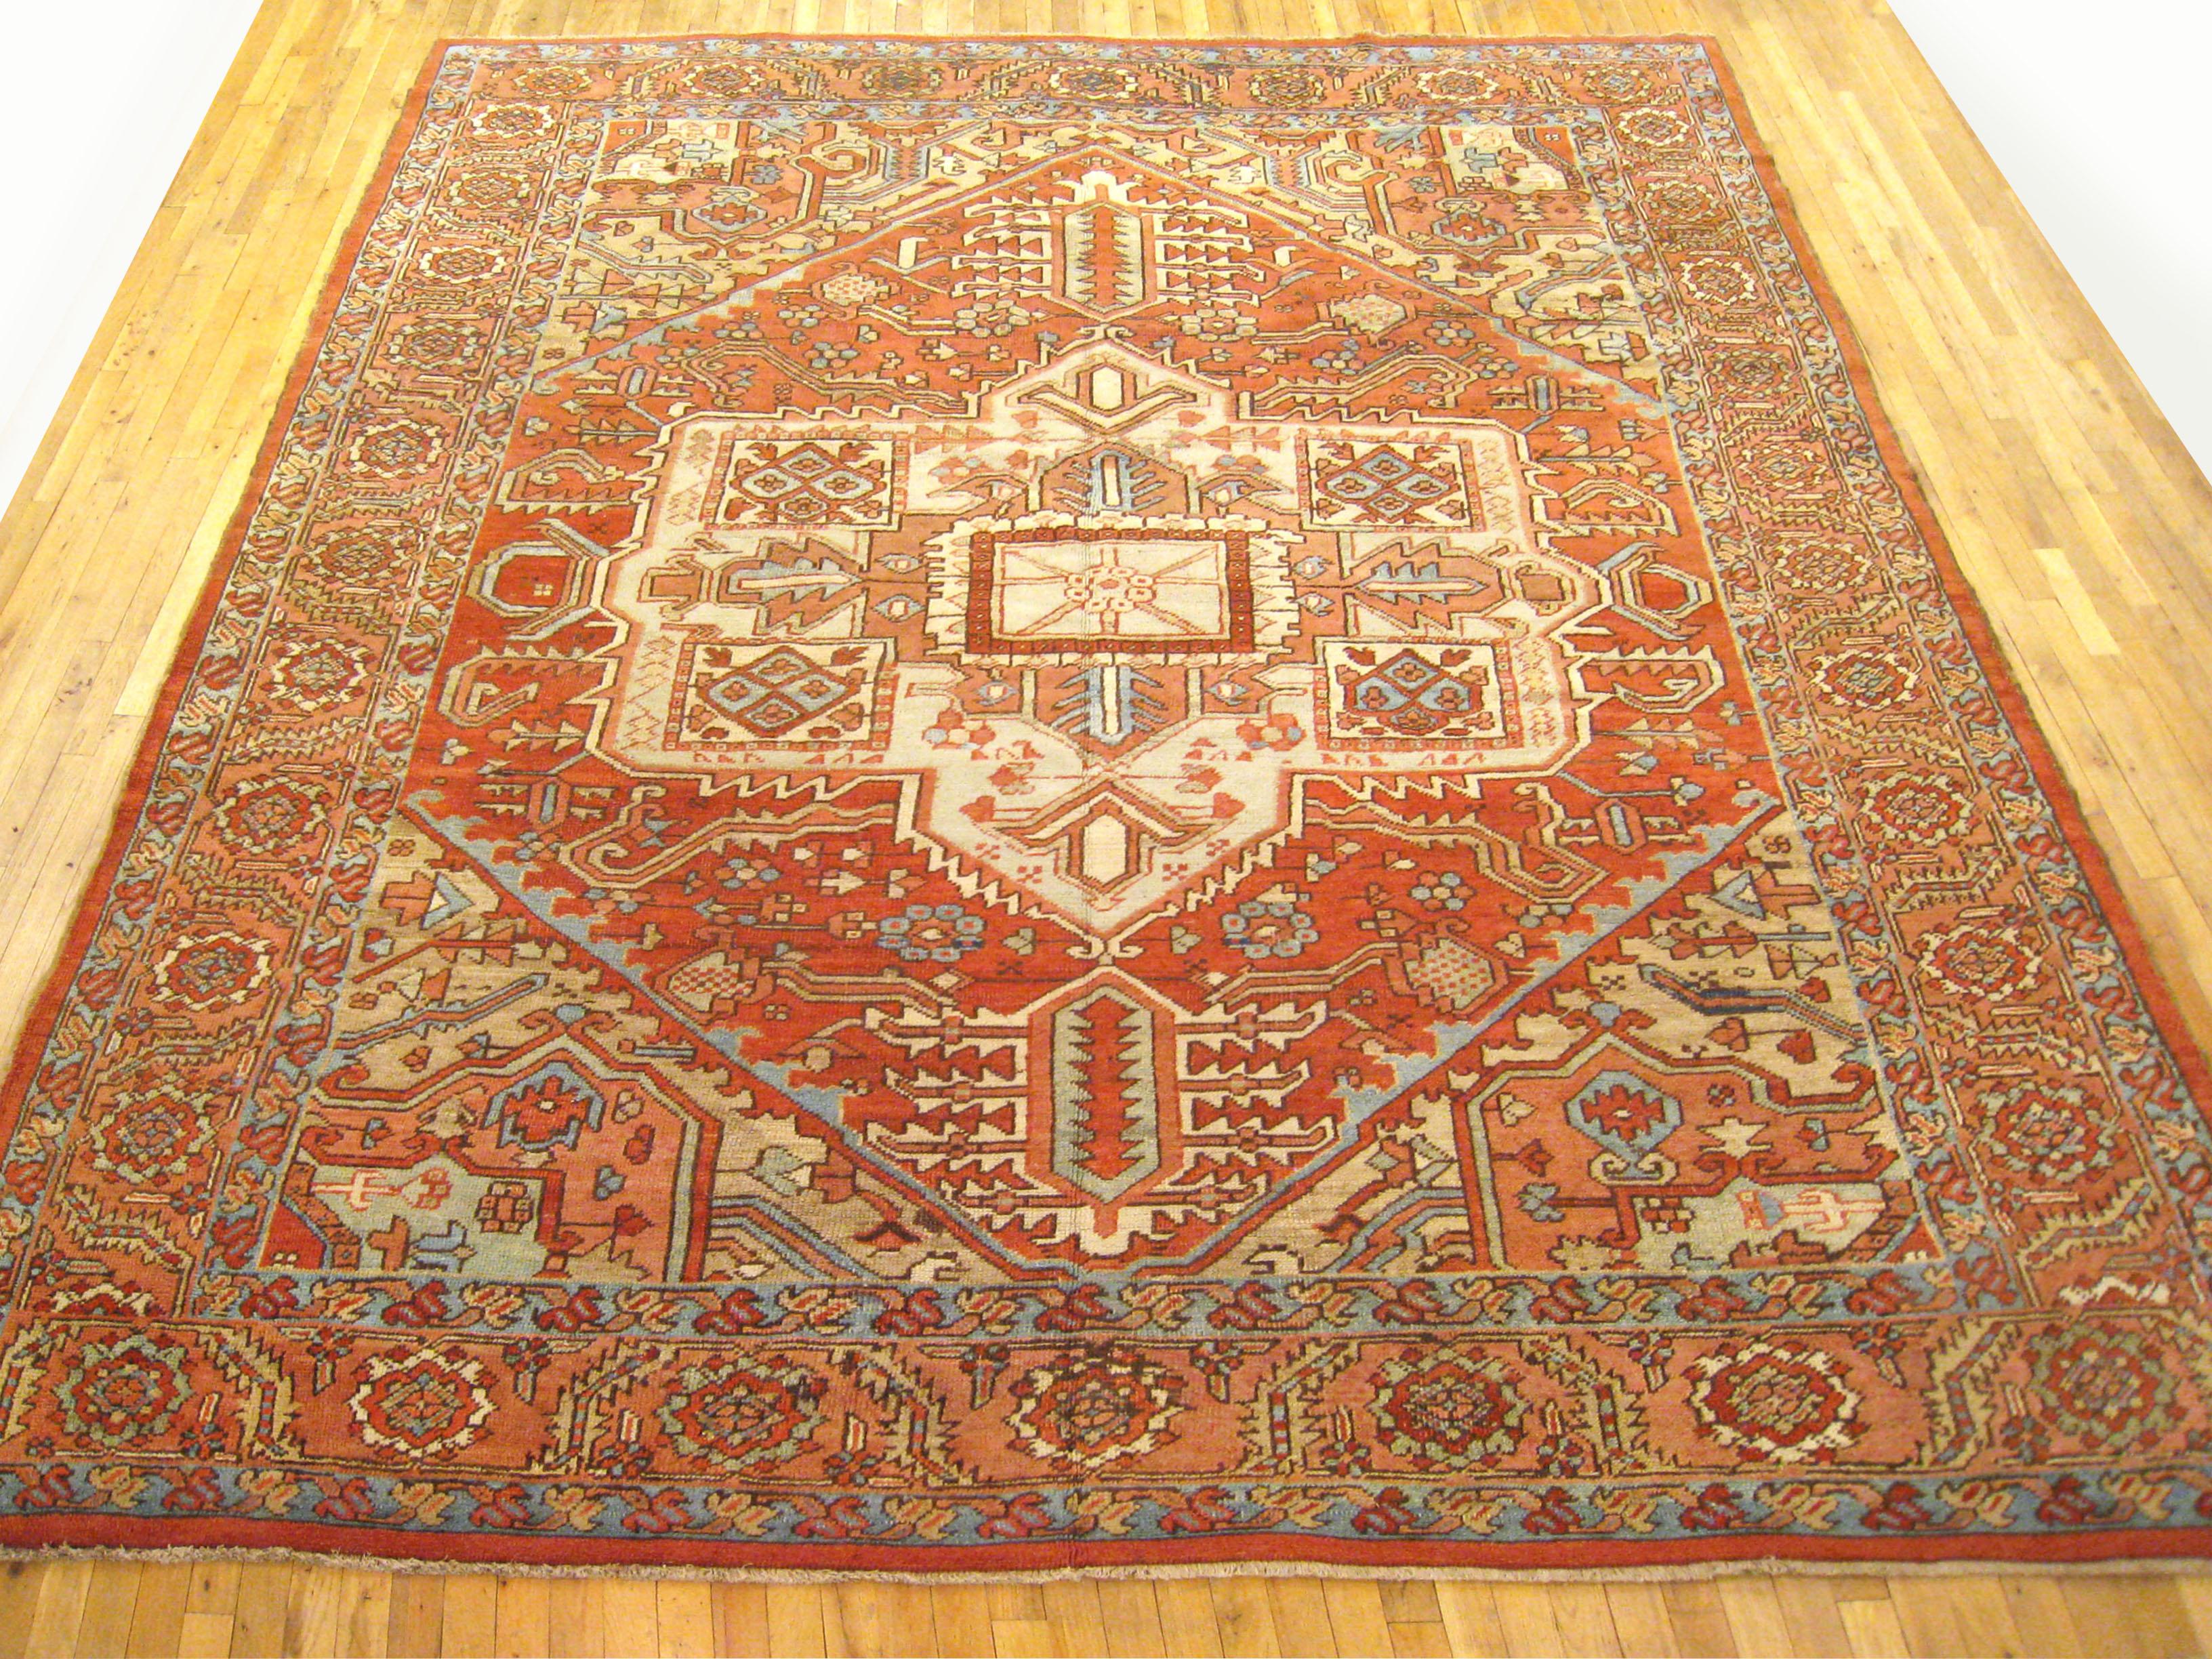 Antique Persian Bakshaish Oriental carpet, in Large Size with Soft Colors

A magnificent Persian Bakshaish oriental carpet, circa 1910, size 11'6